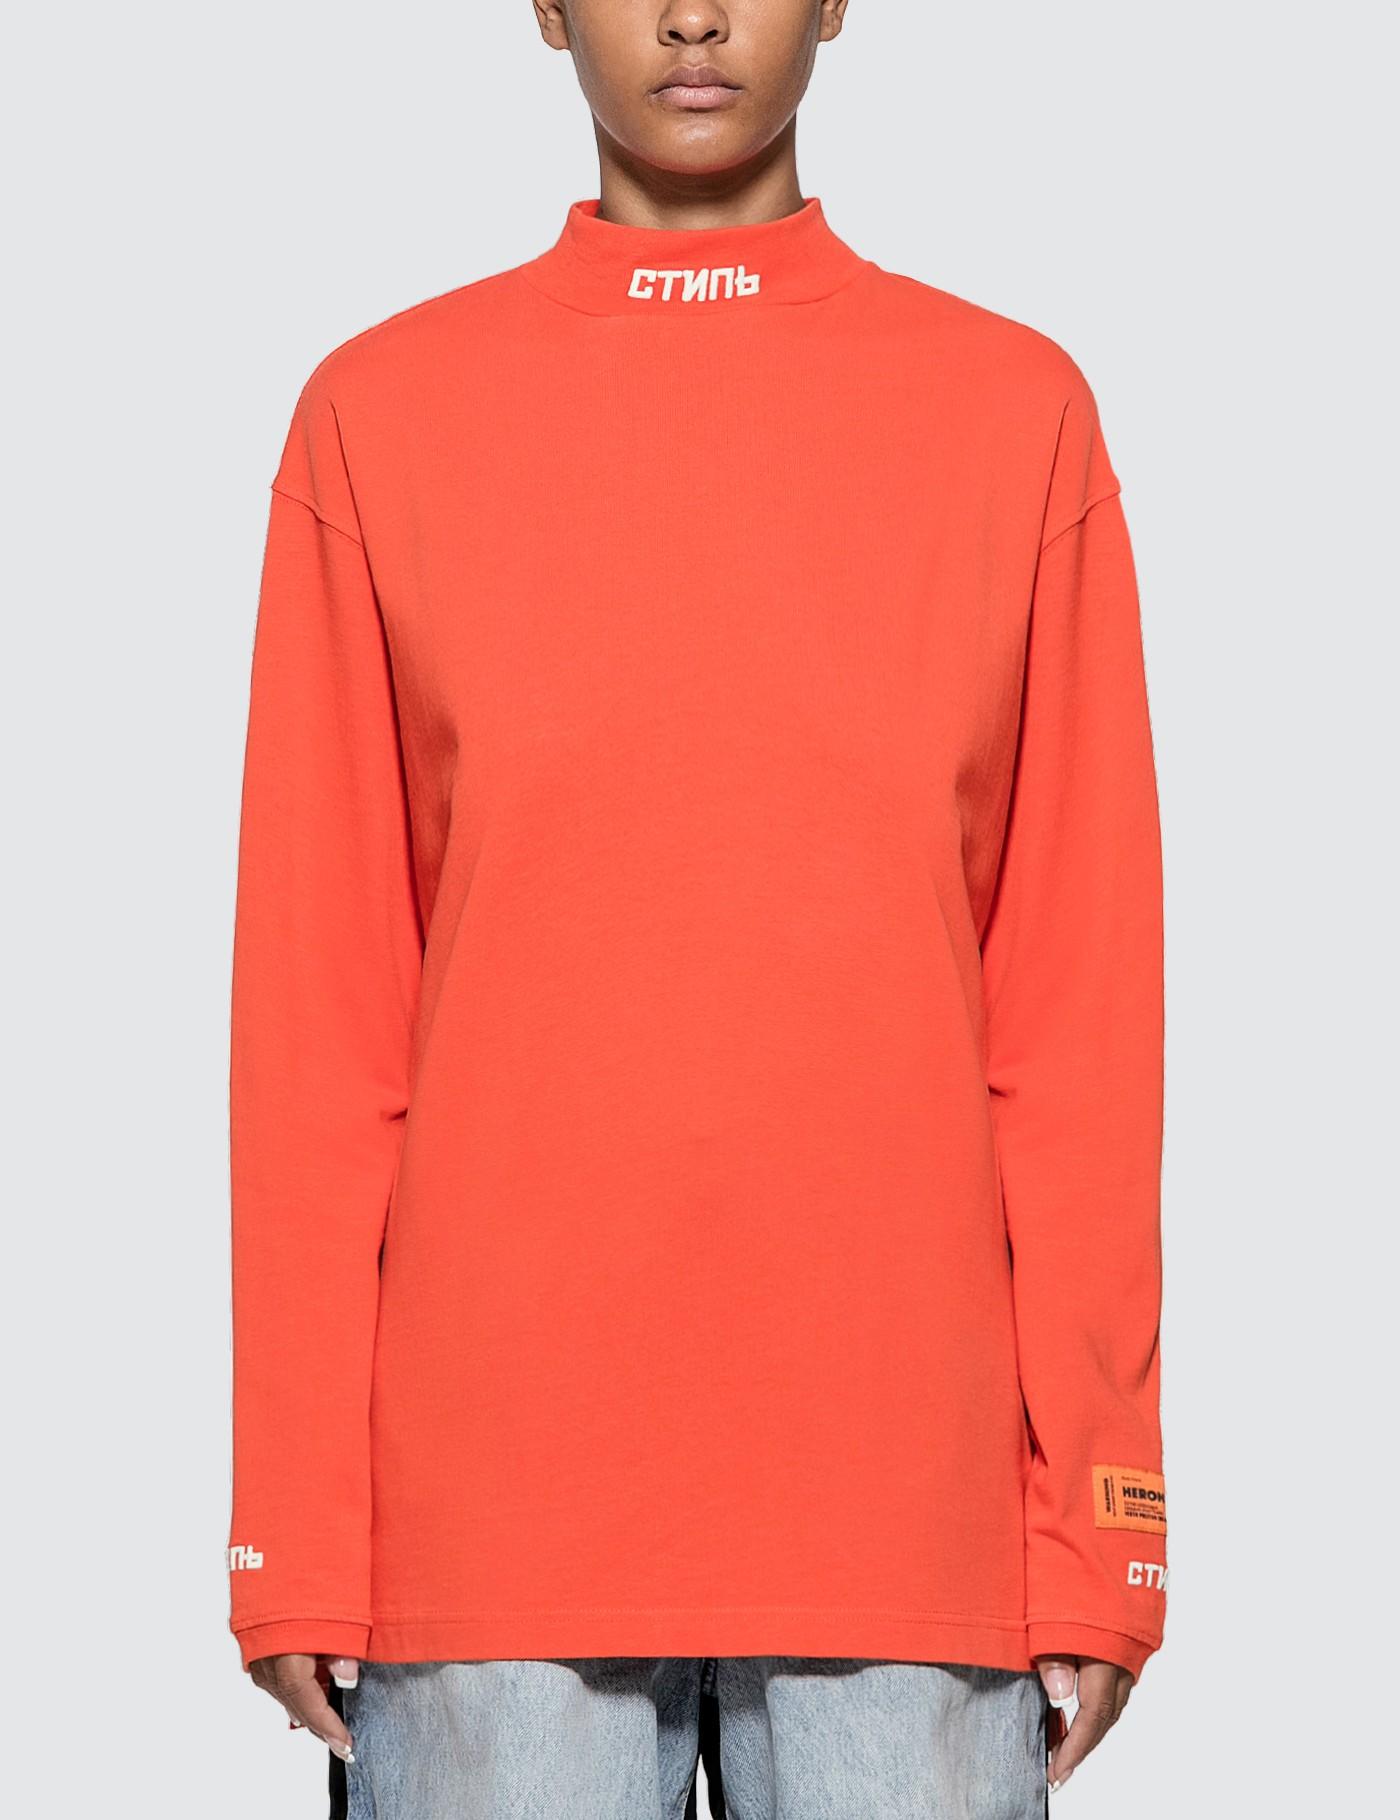 Heron Preston Cotton Ctnmb Long Sleeve T-shirt in Orange - Lyst